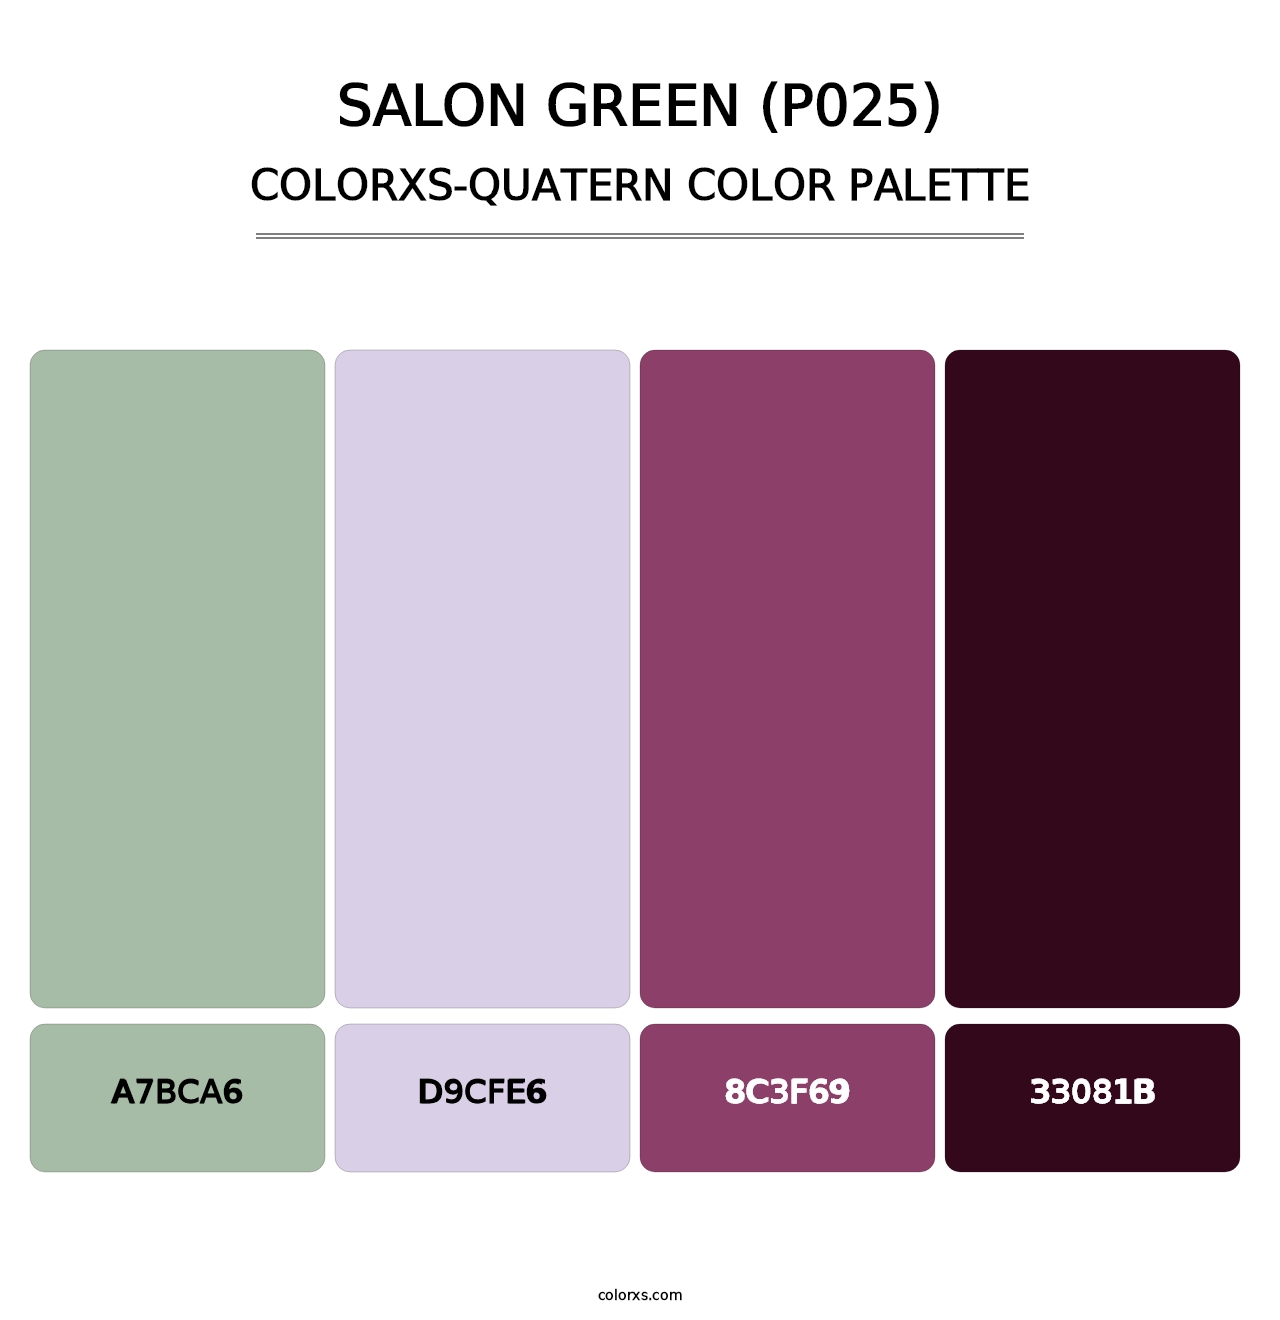 Salon Green (P025) - Colorxs Quatern Palette